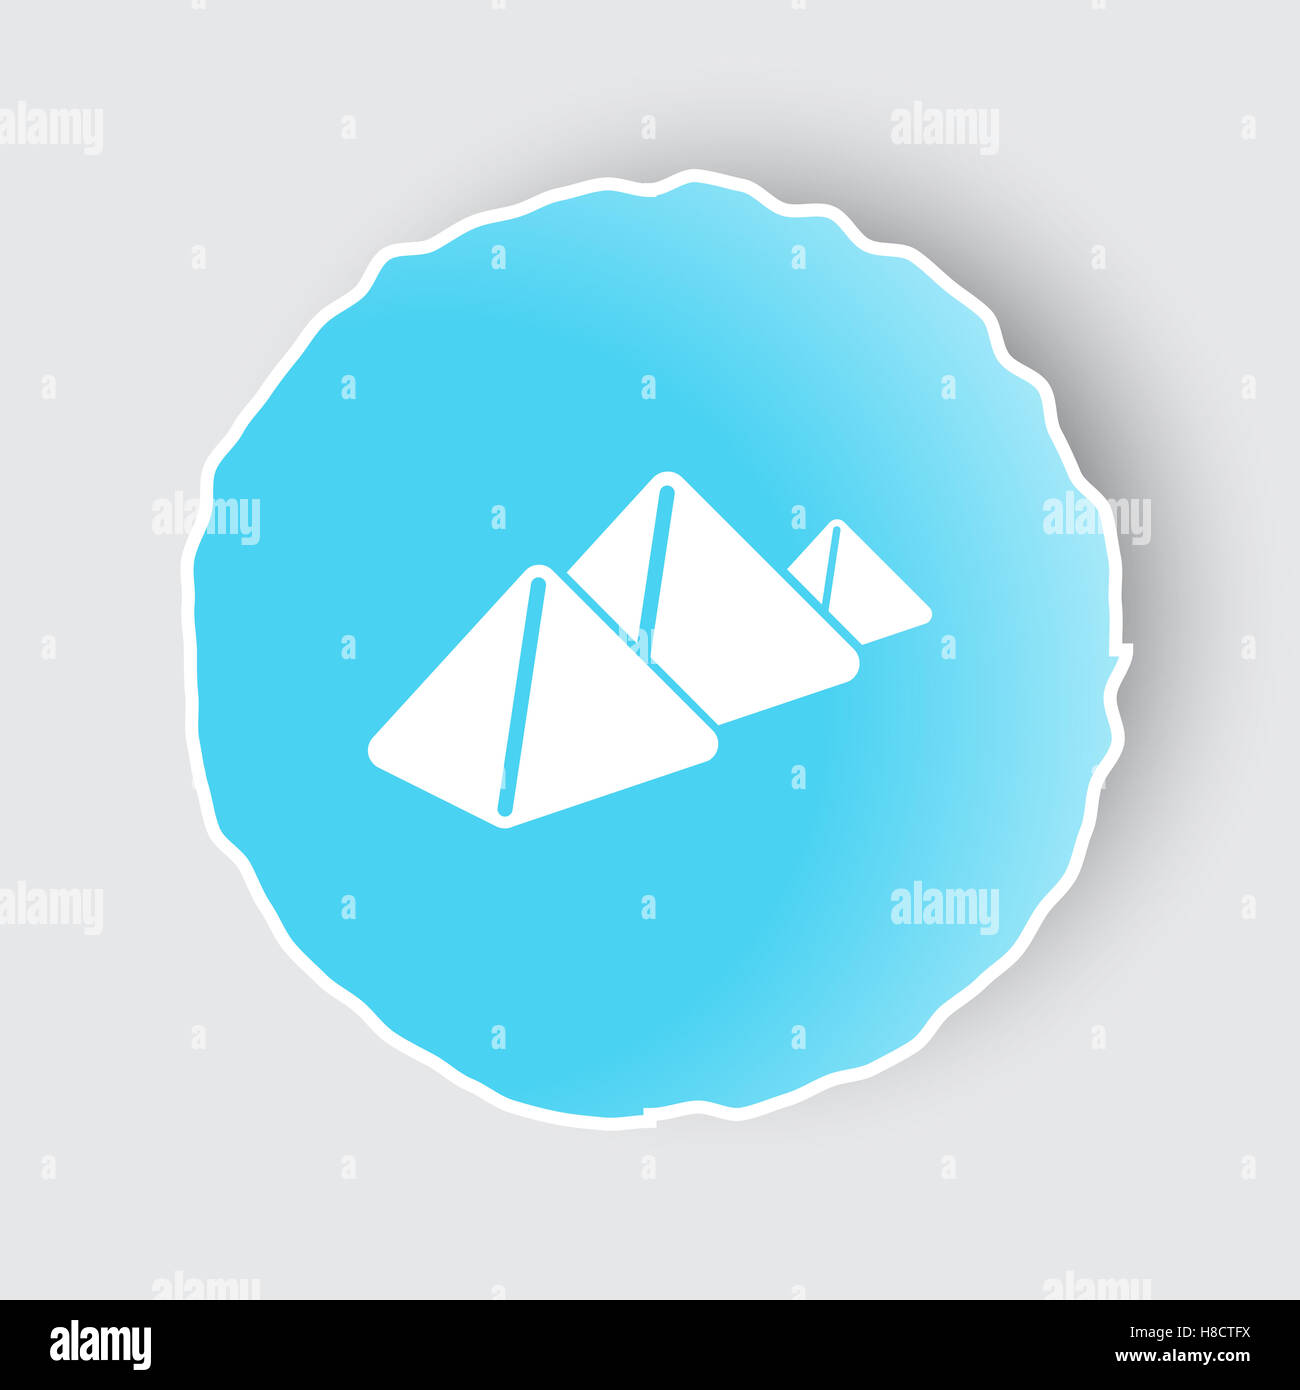 Blue app button with Pyramids icon on white. Stock Photo